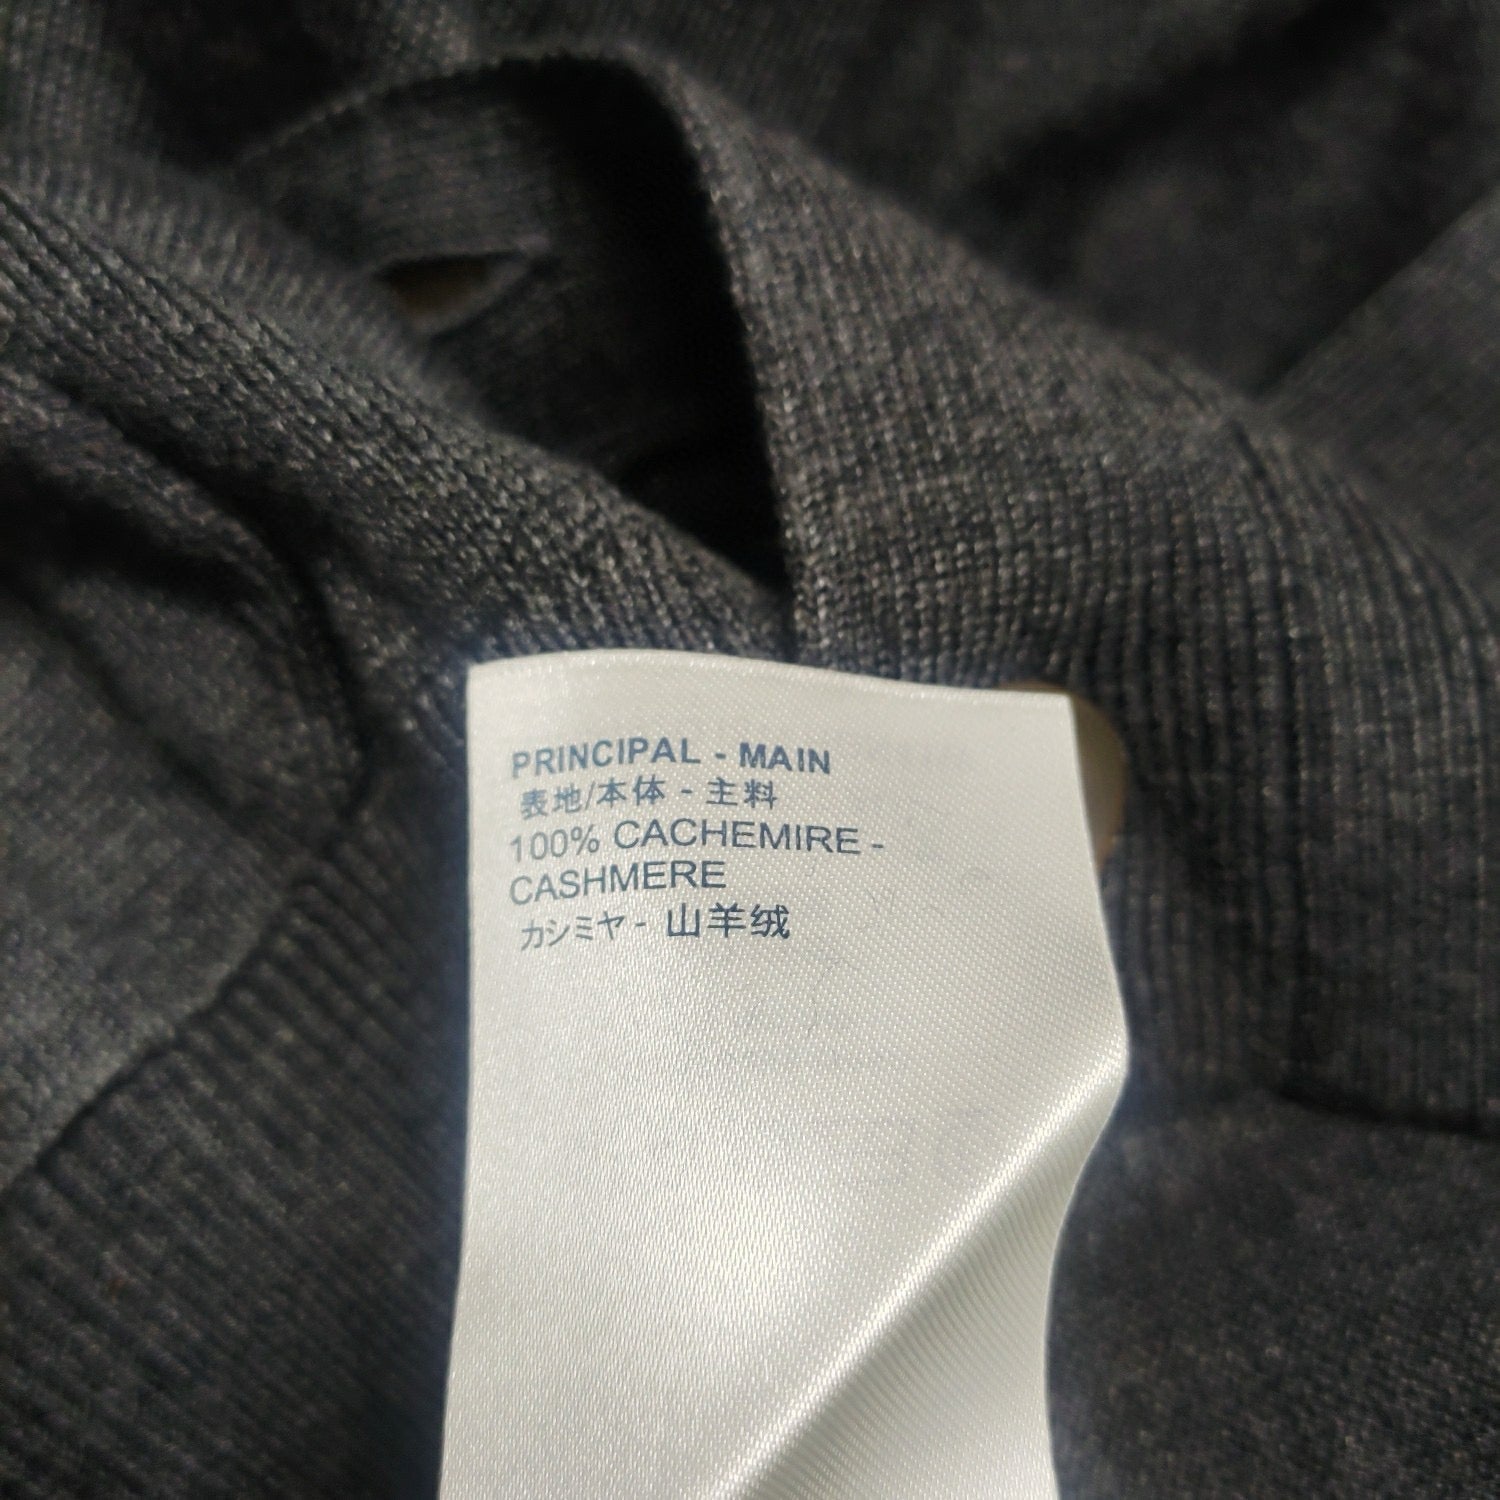 Grey Jacket - Size S